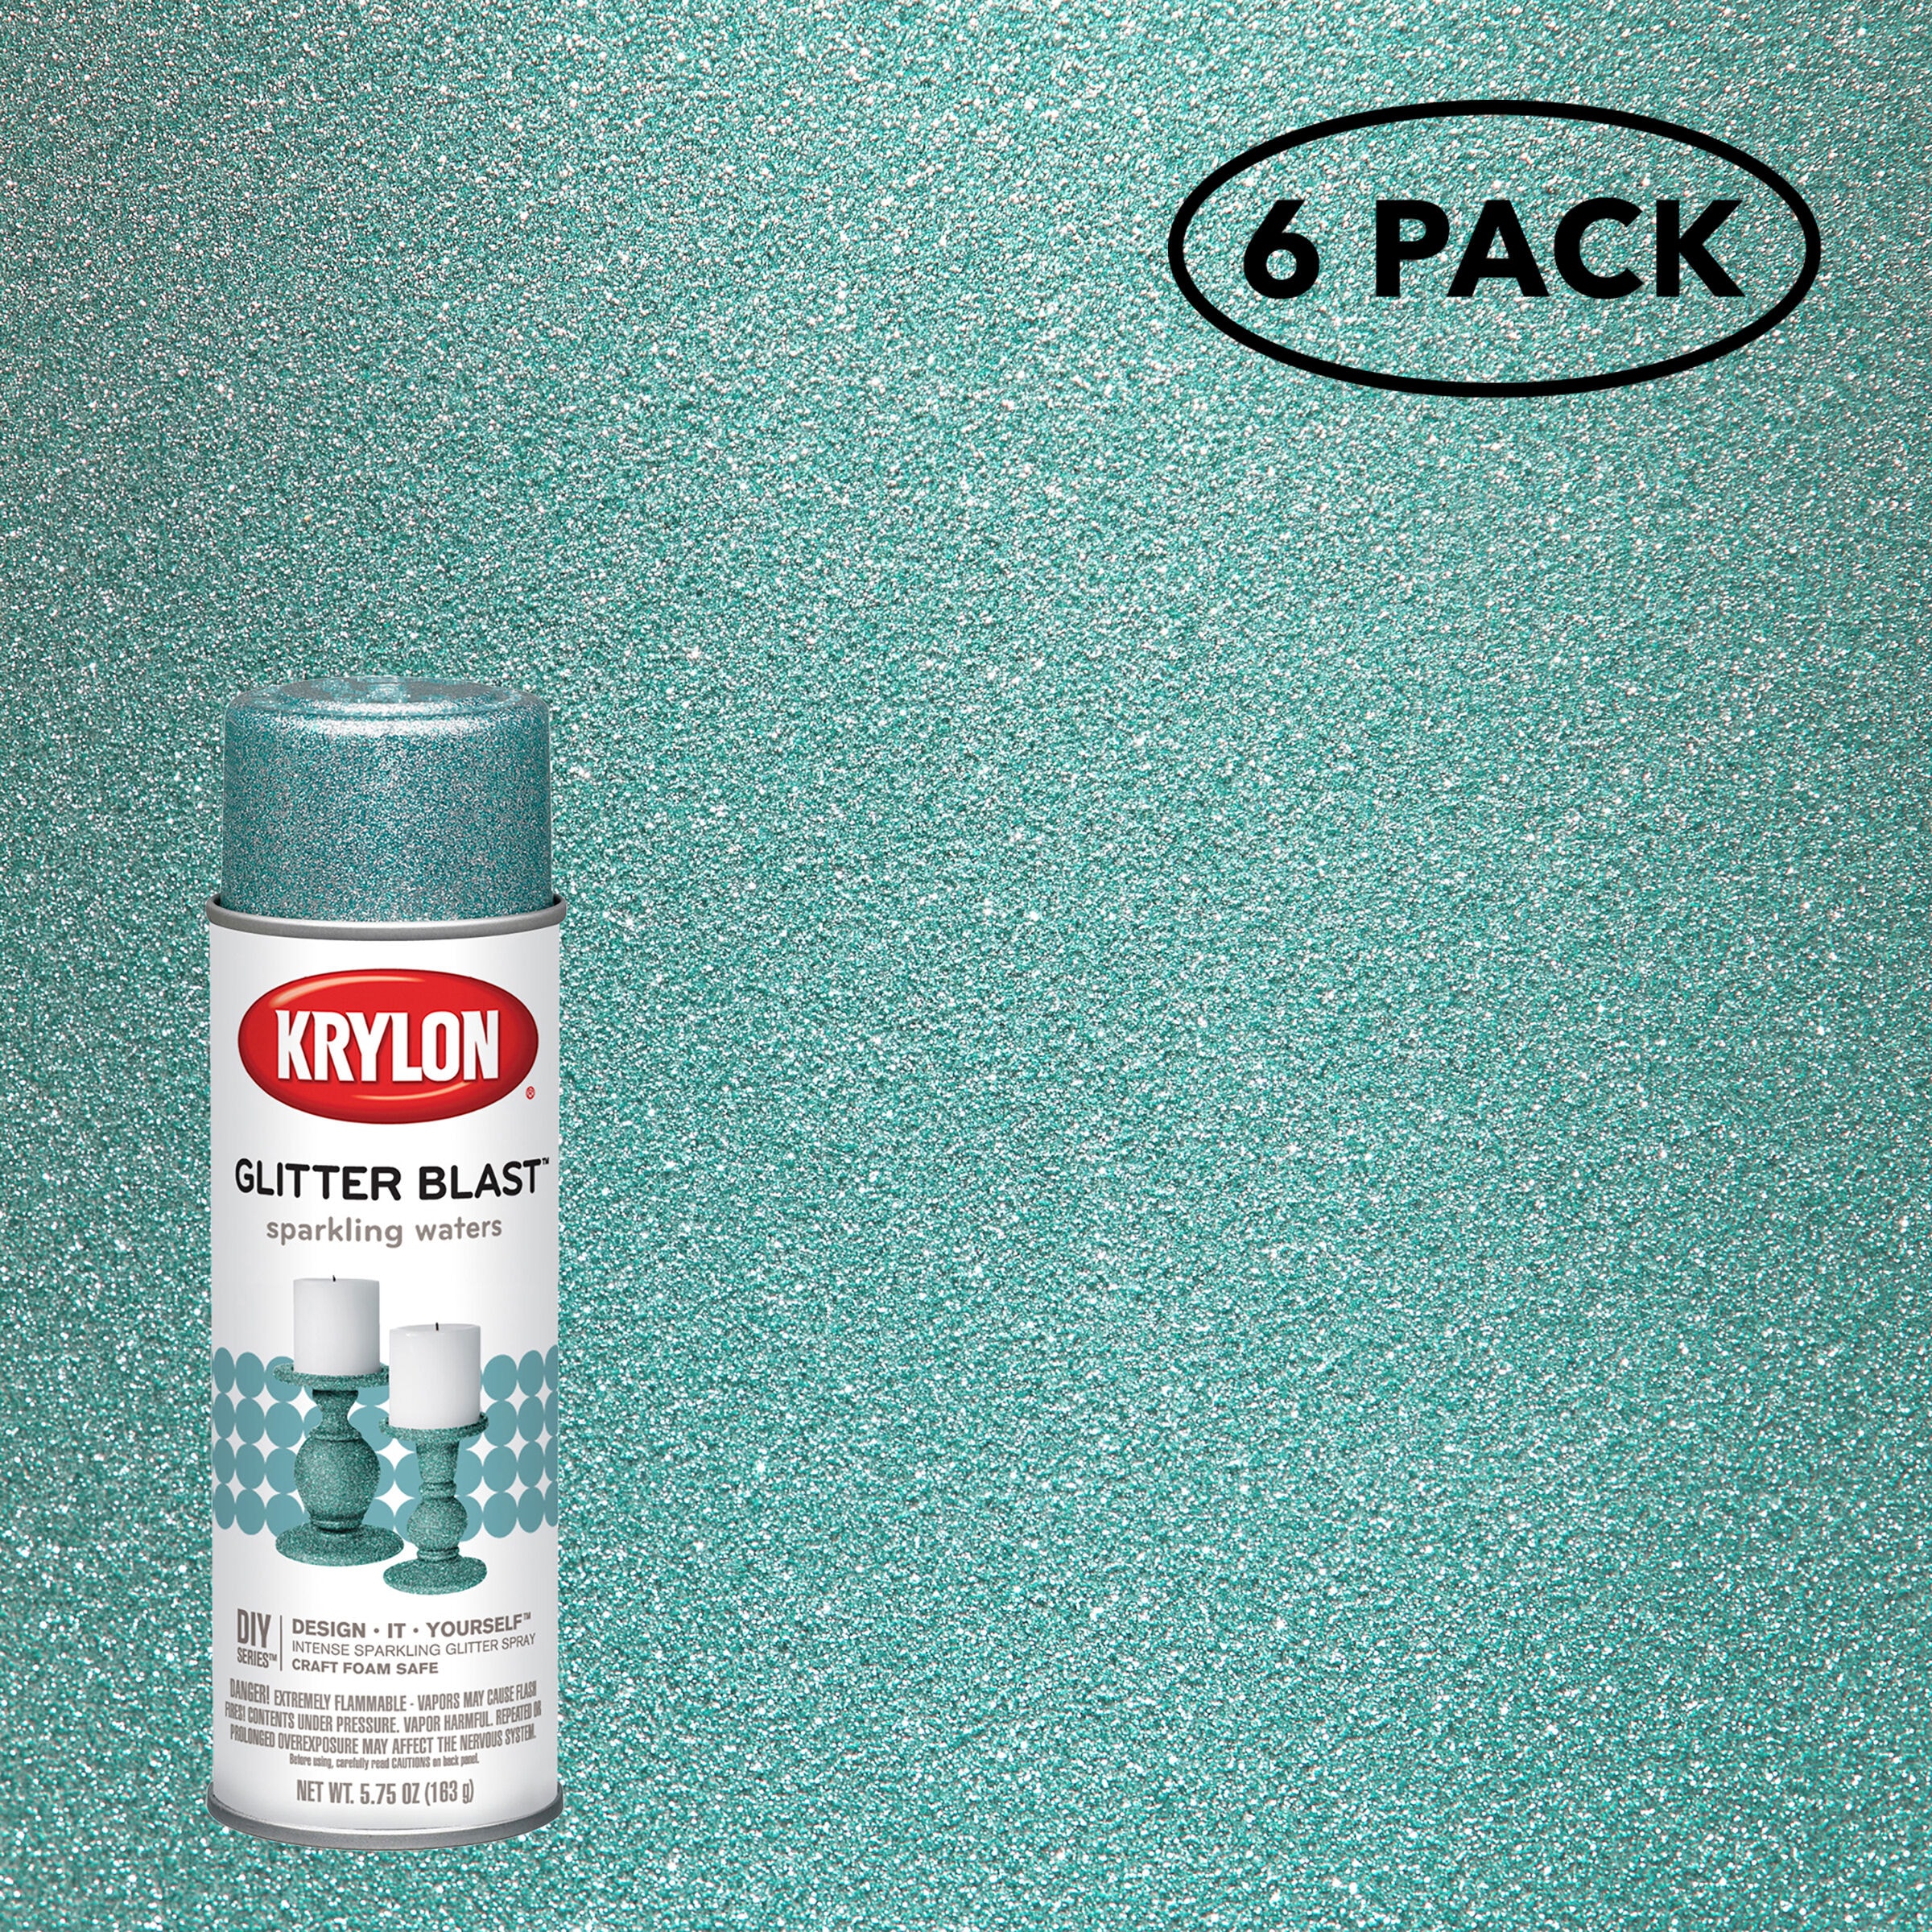  Krylon K03806A00 Glitter Blast Glitter Spray Paint for Craft  Projects, Cherry Bomb Red, 5.75 oz : Arts, Crafts & Sewing